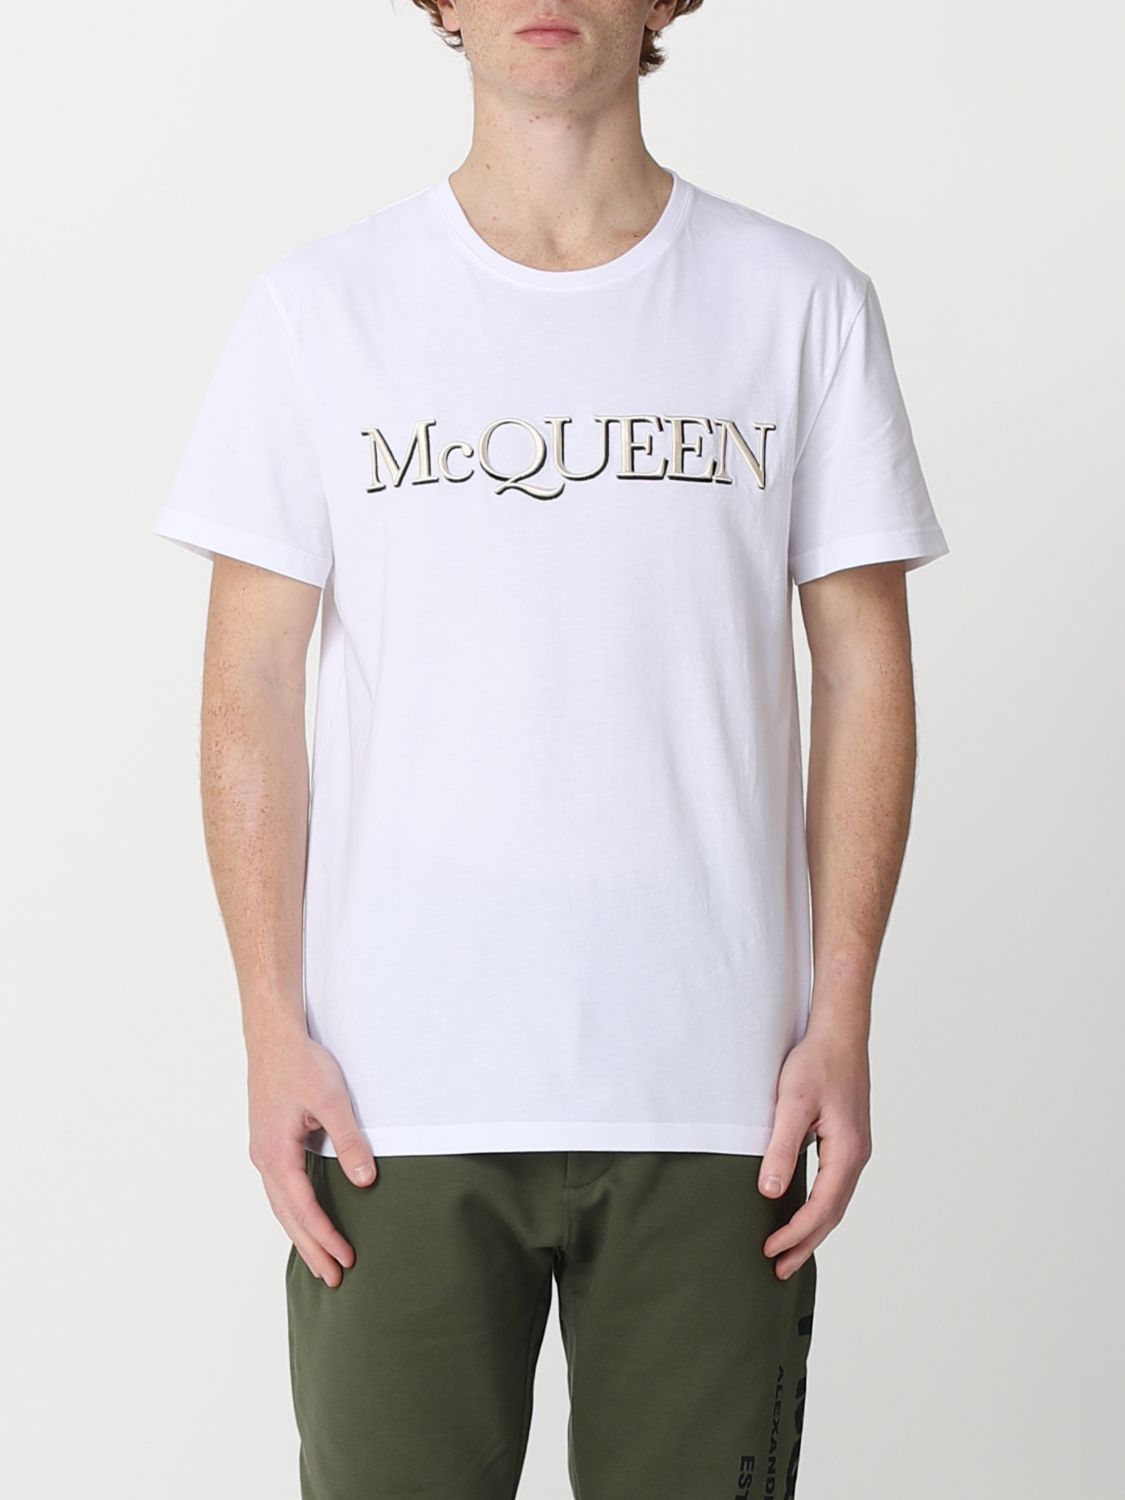 ALEXANDER MCQUEEN: t-shirt with logo - White | Alexander Mcqueen t ...